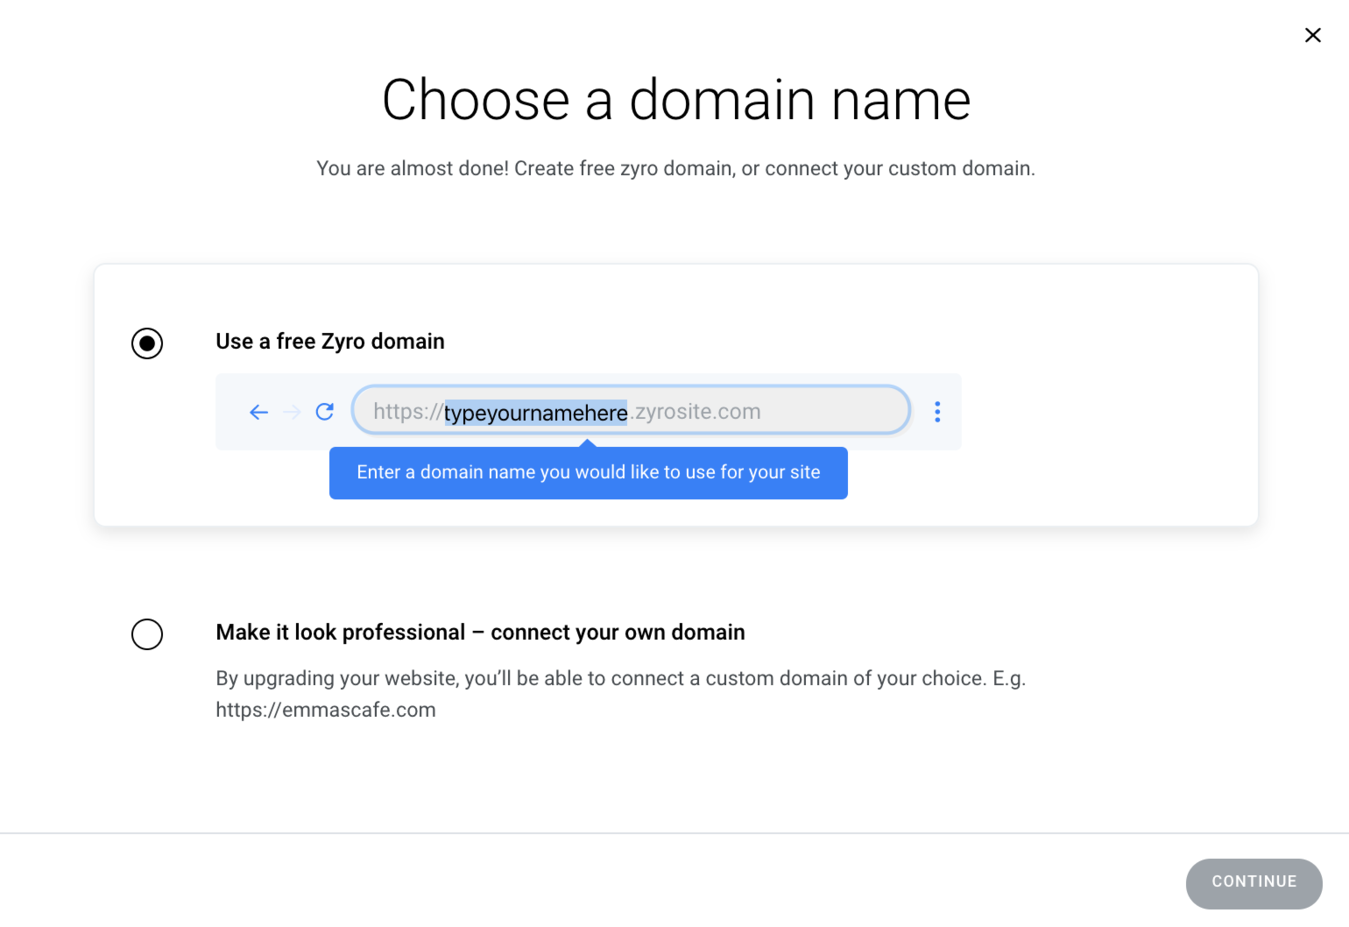 choosing a domain name on zyro